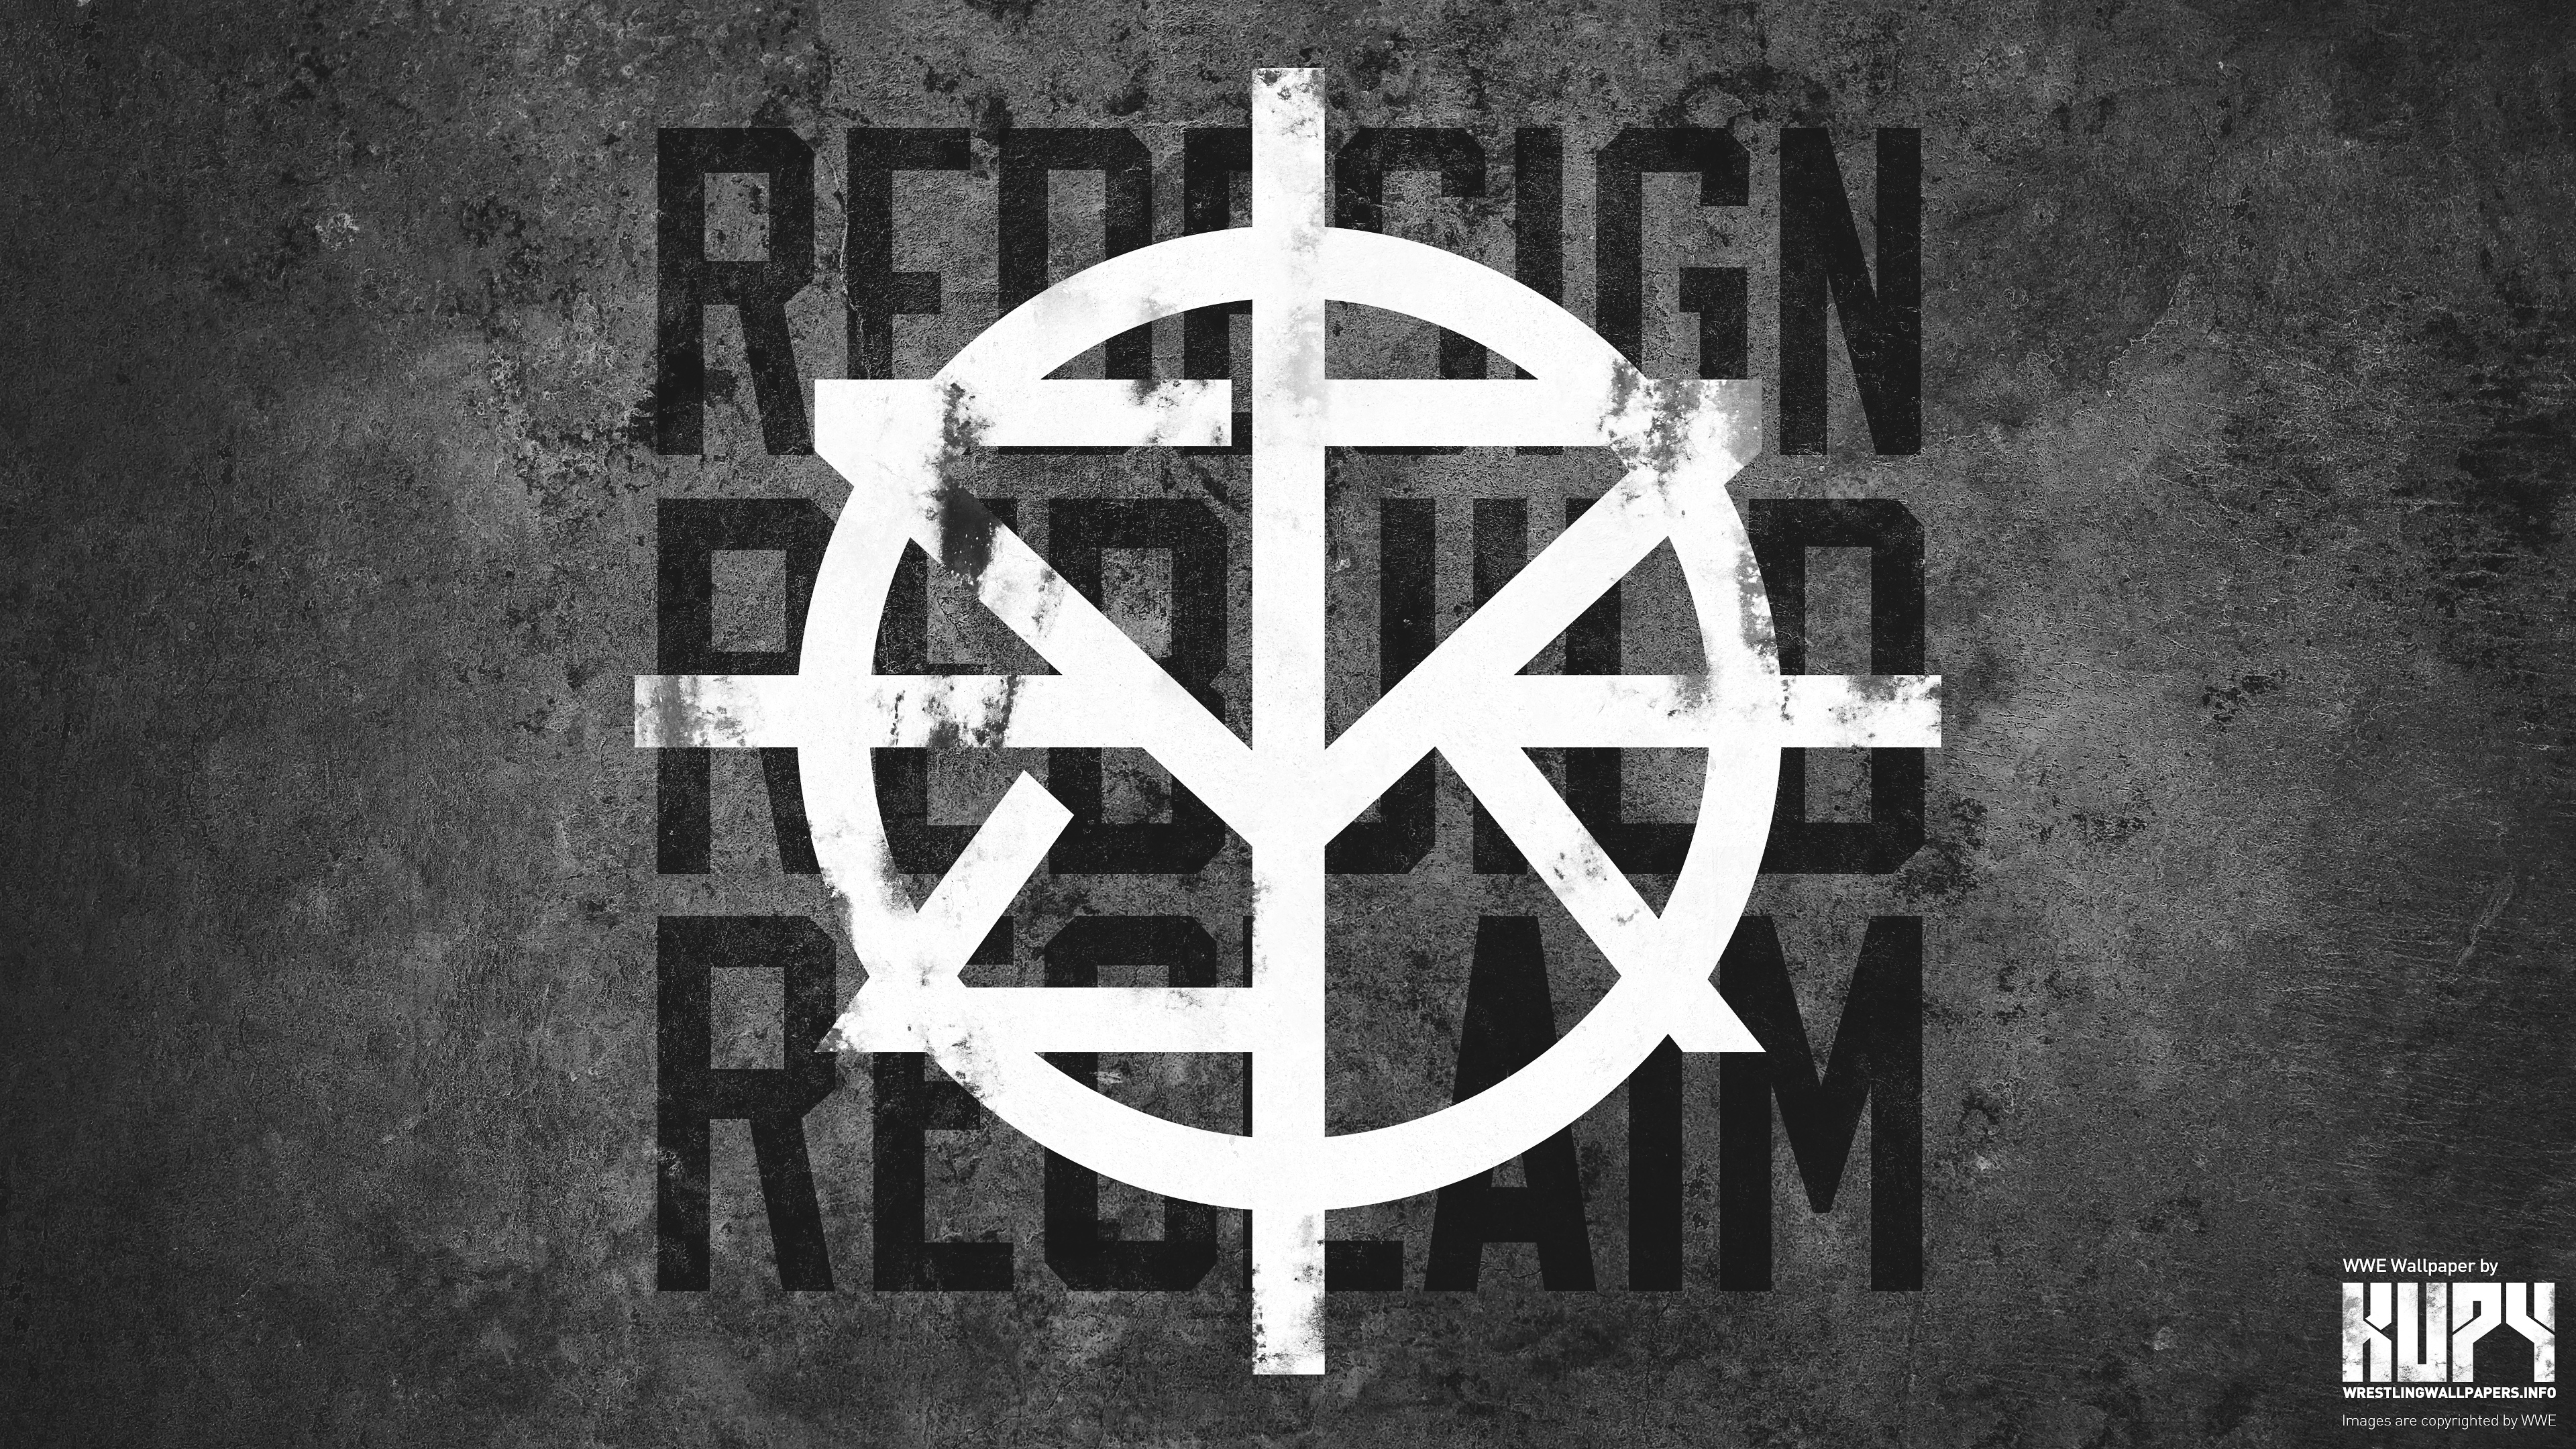 NEW Seth Rollins Redesign Rebuild Reclaim wallpaper! - Kupy Wrestling  Wallpapers